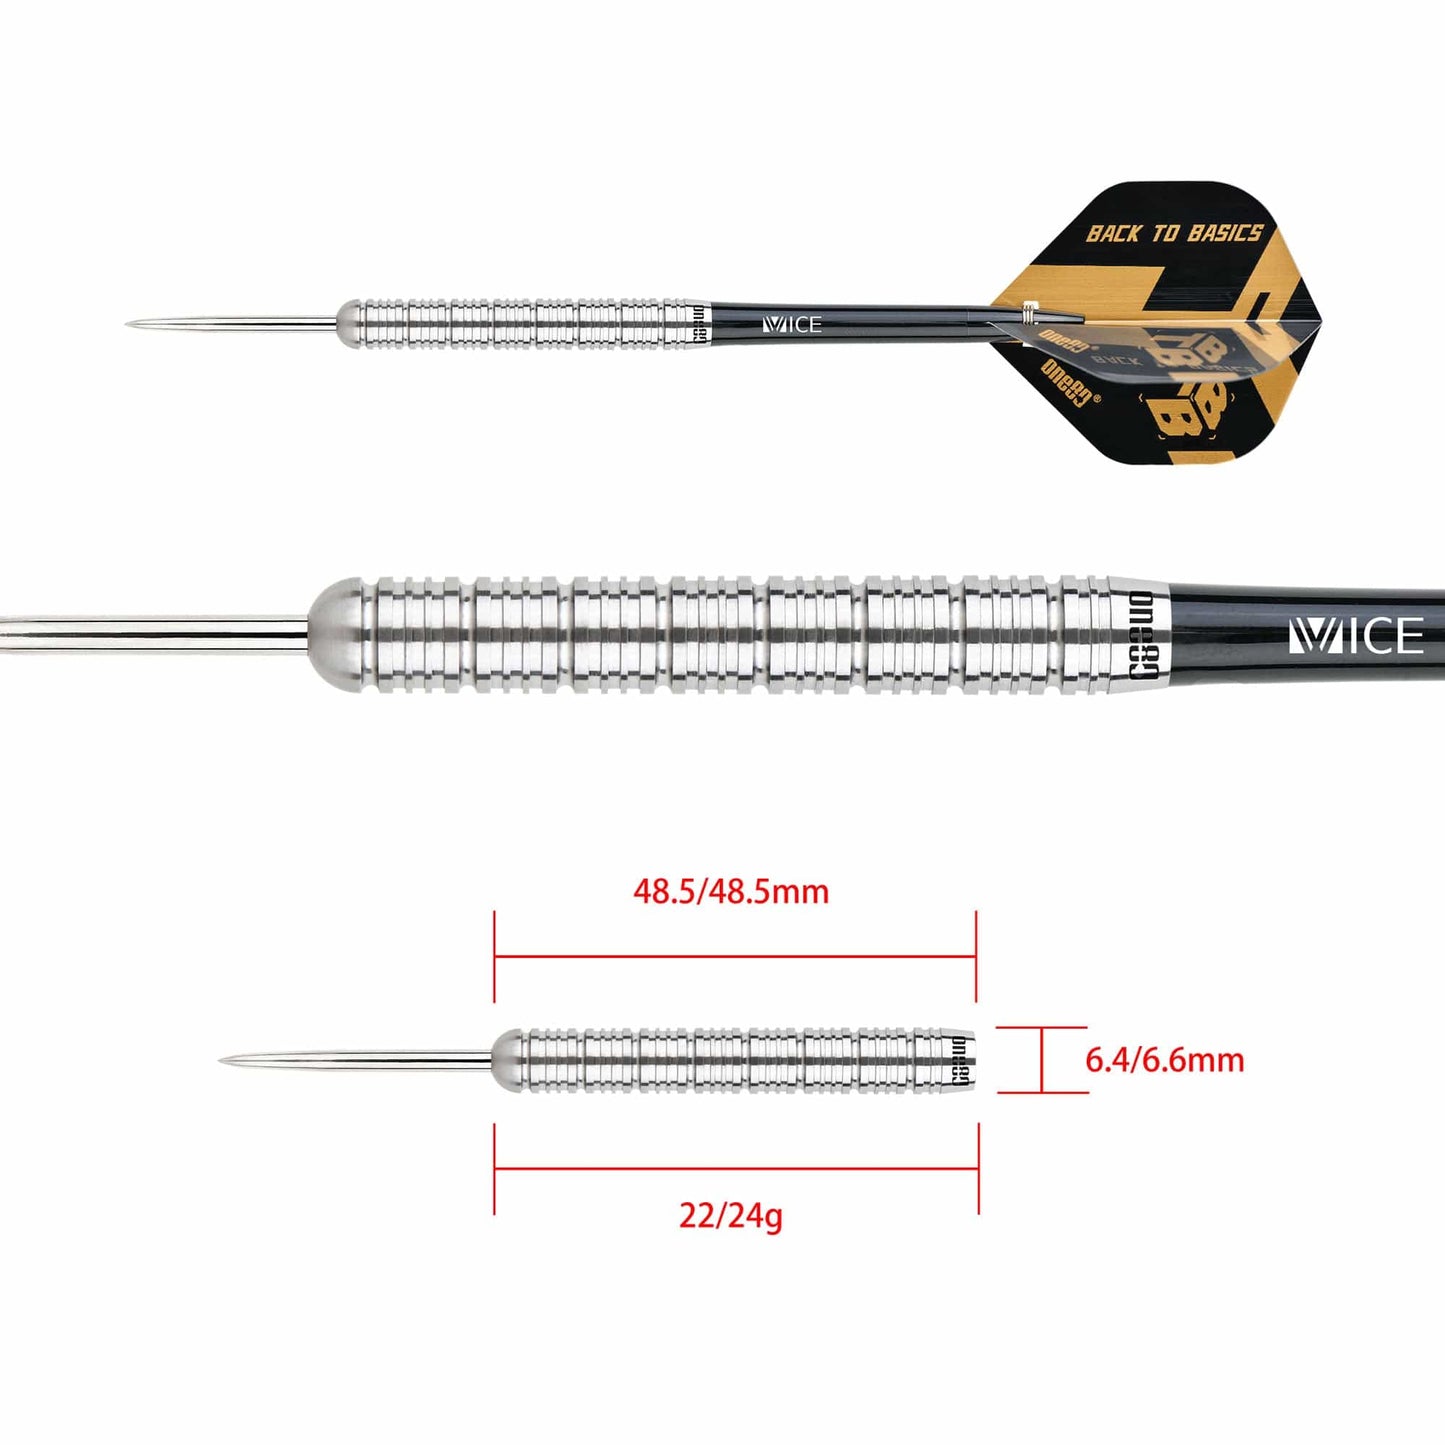 One80 Back To Basic Darts - Steel Tip - EBS - Natural - Ringed